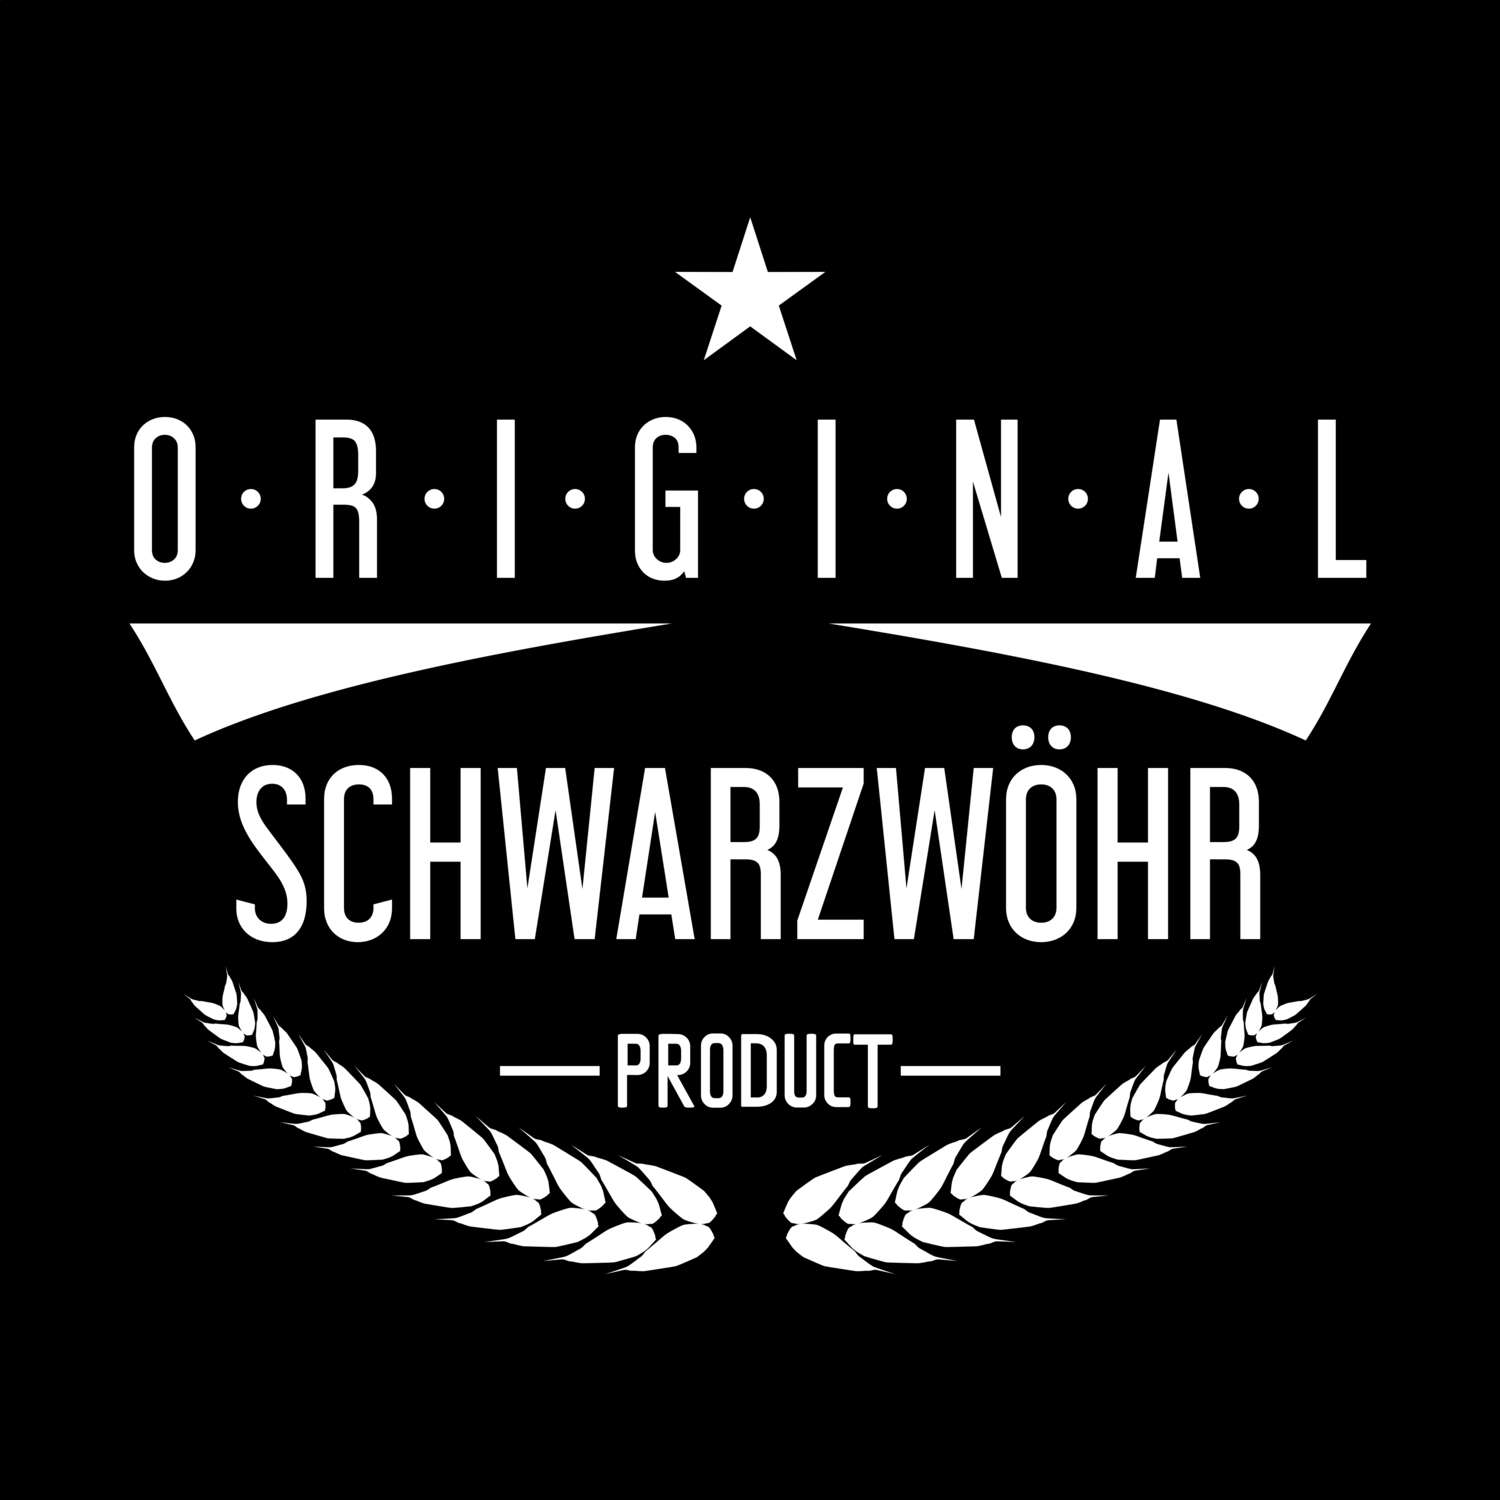 Schwarzwöhr T-Shirt »Original Product«